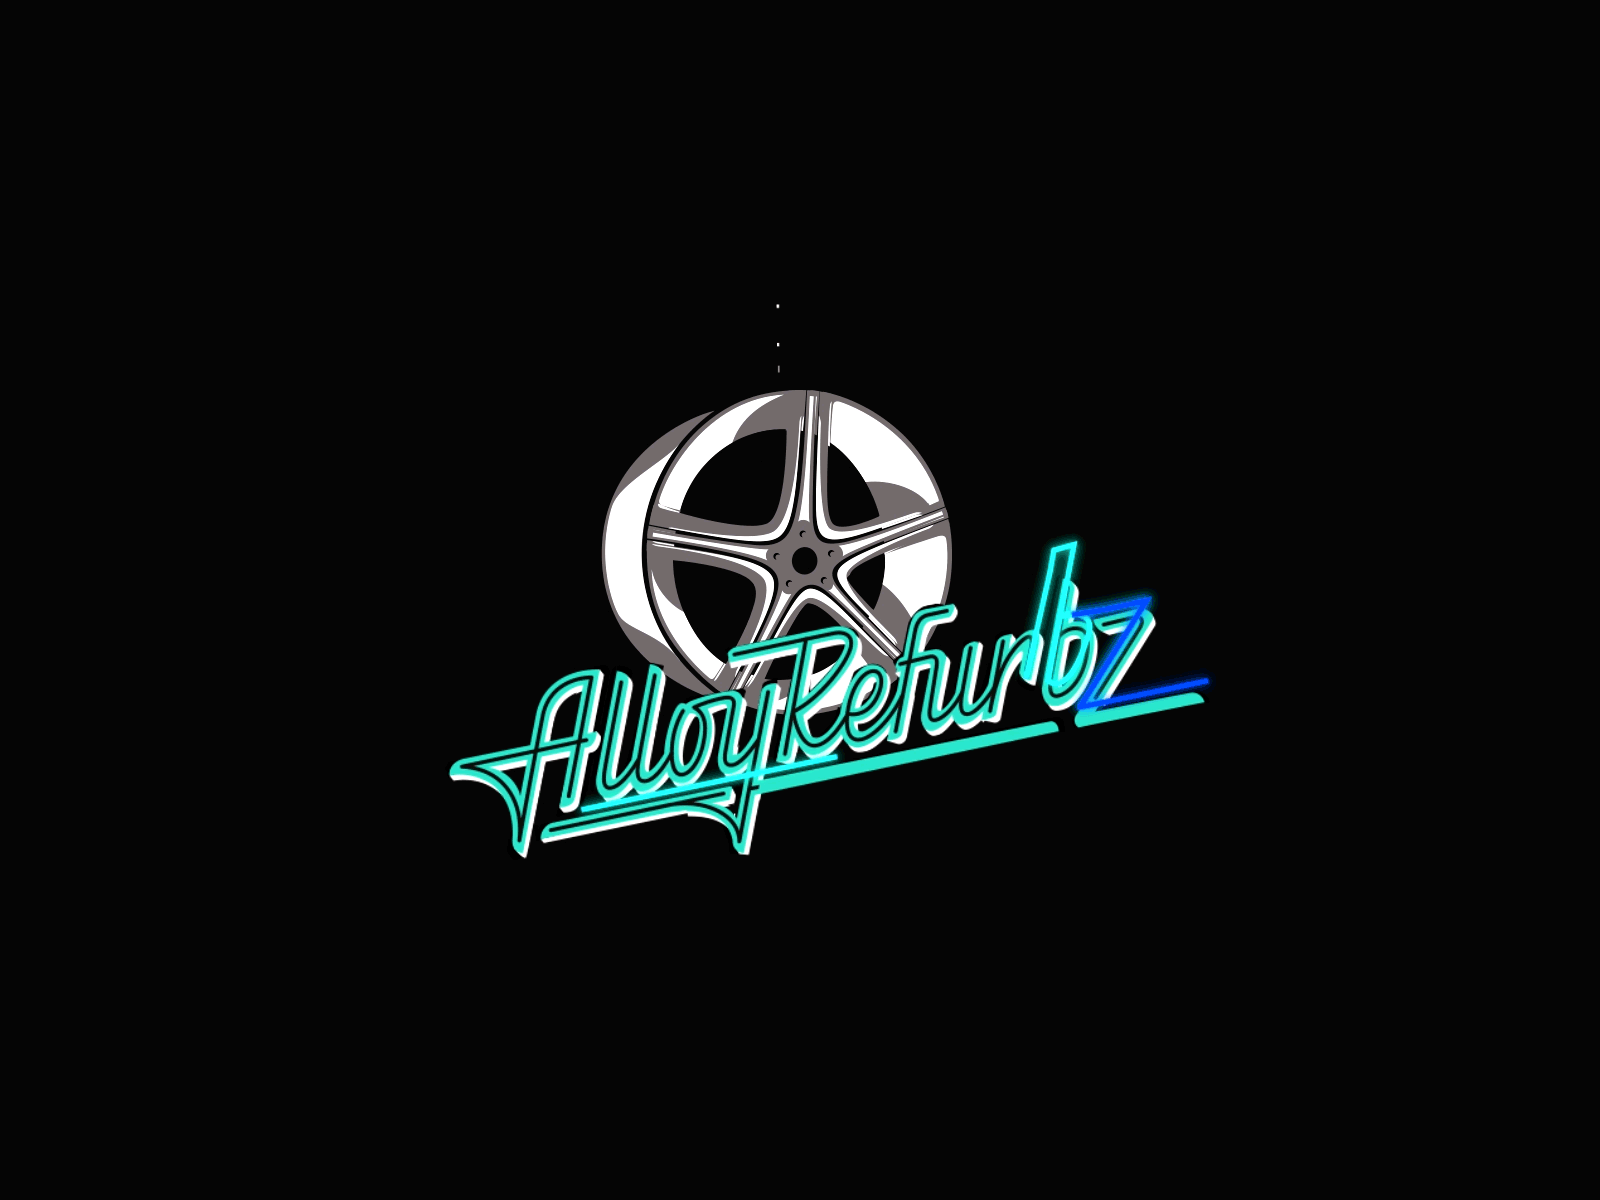 Alloy Refurbz logo animation animation logo animation motion graphics motion logo refurbishment wheels